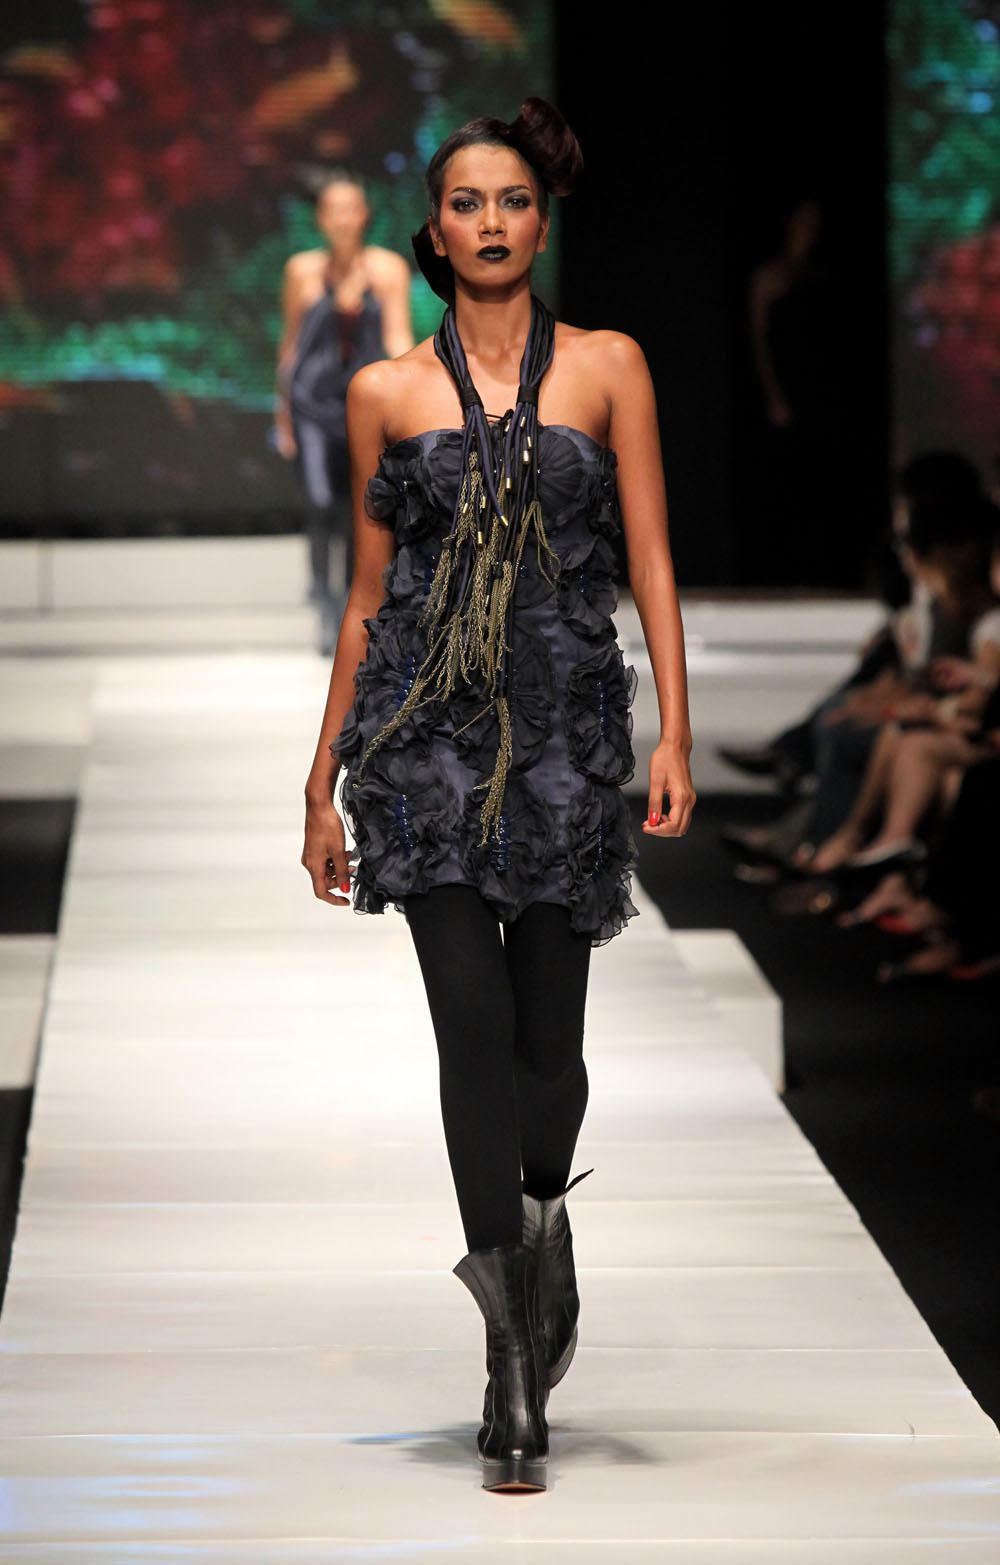 Jakarta Fashion Week 2009: Ali Charisma